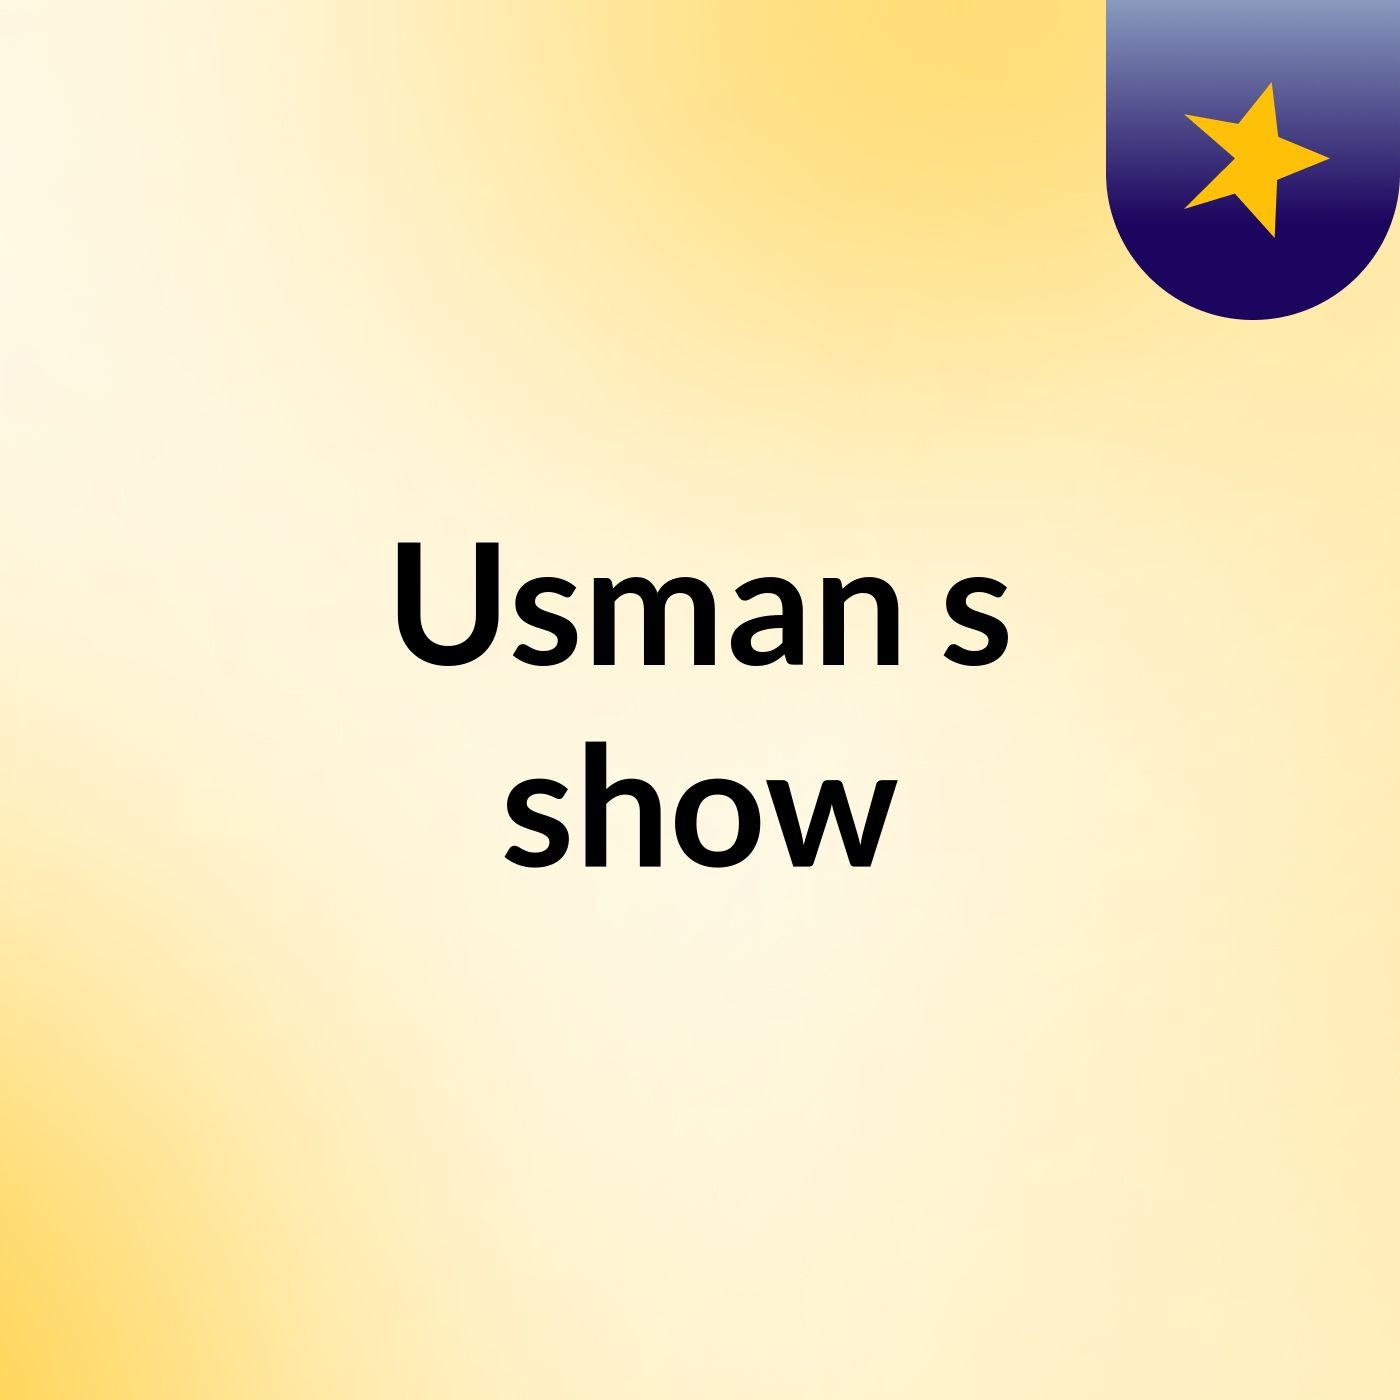 Usman's show